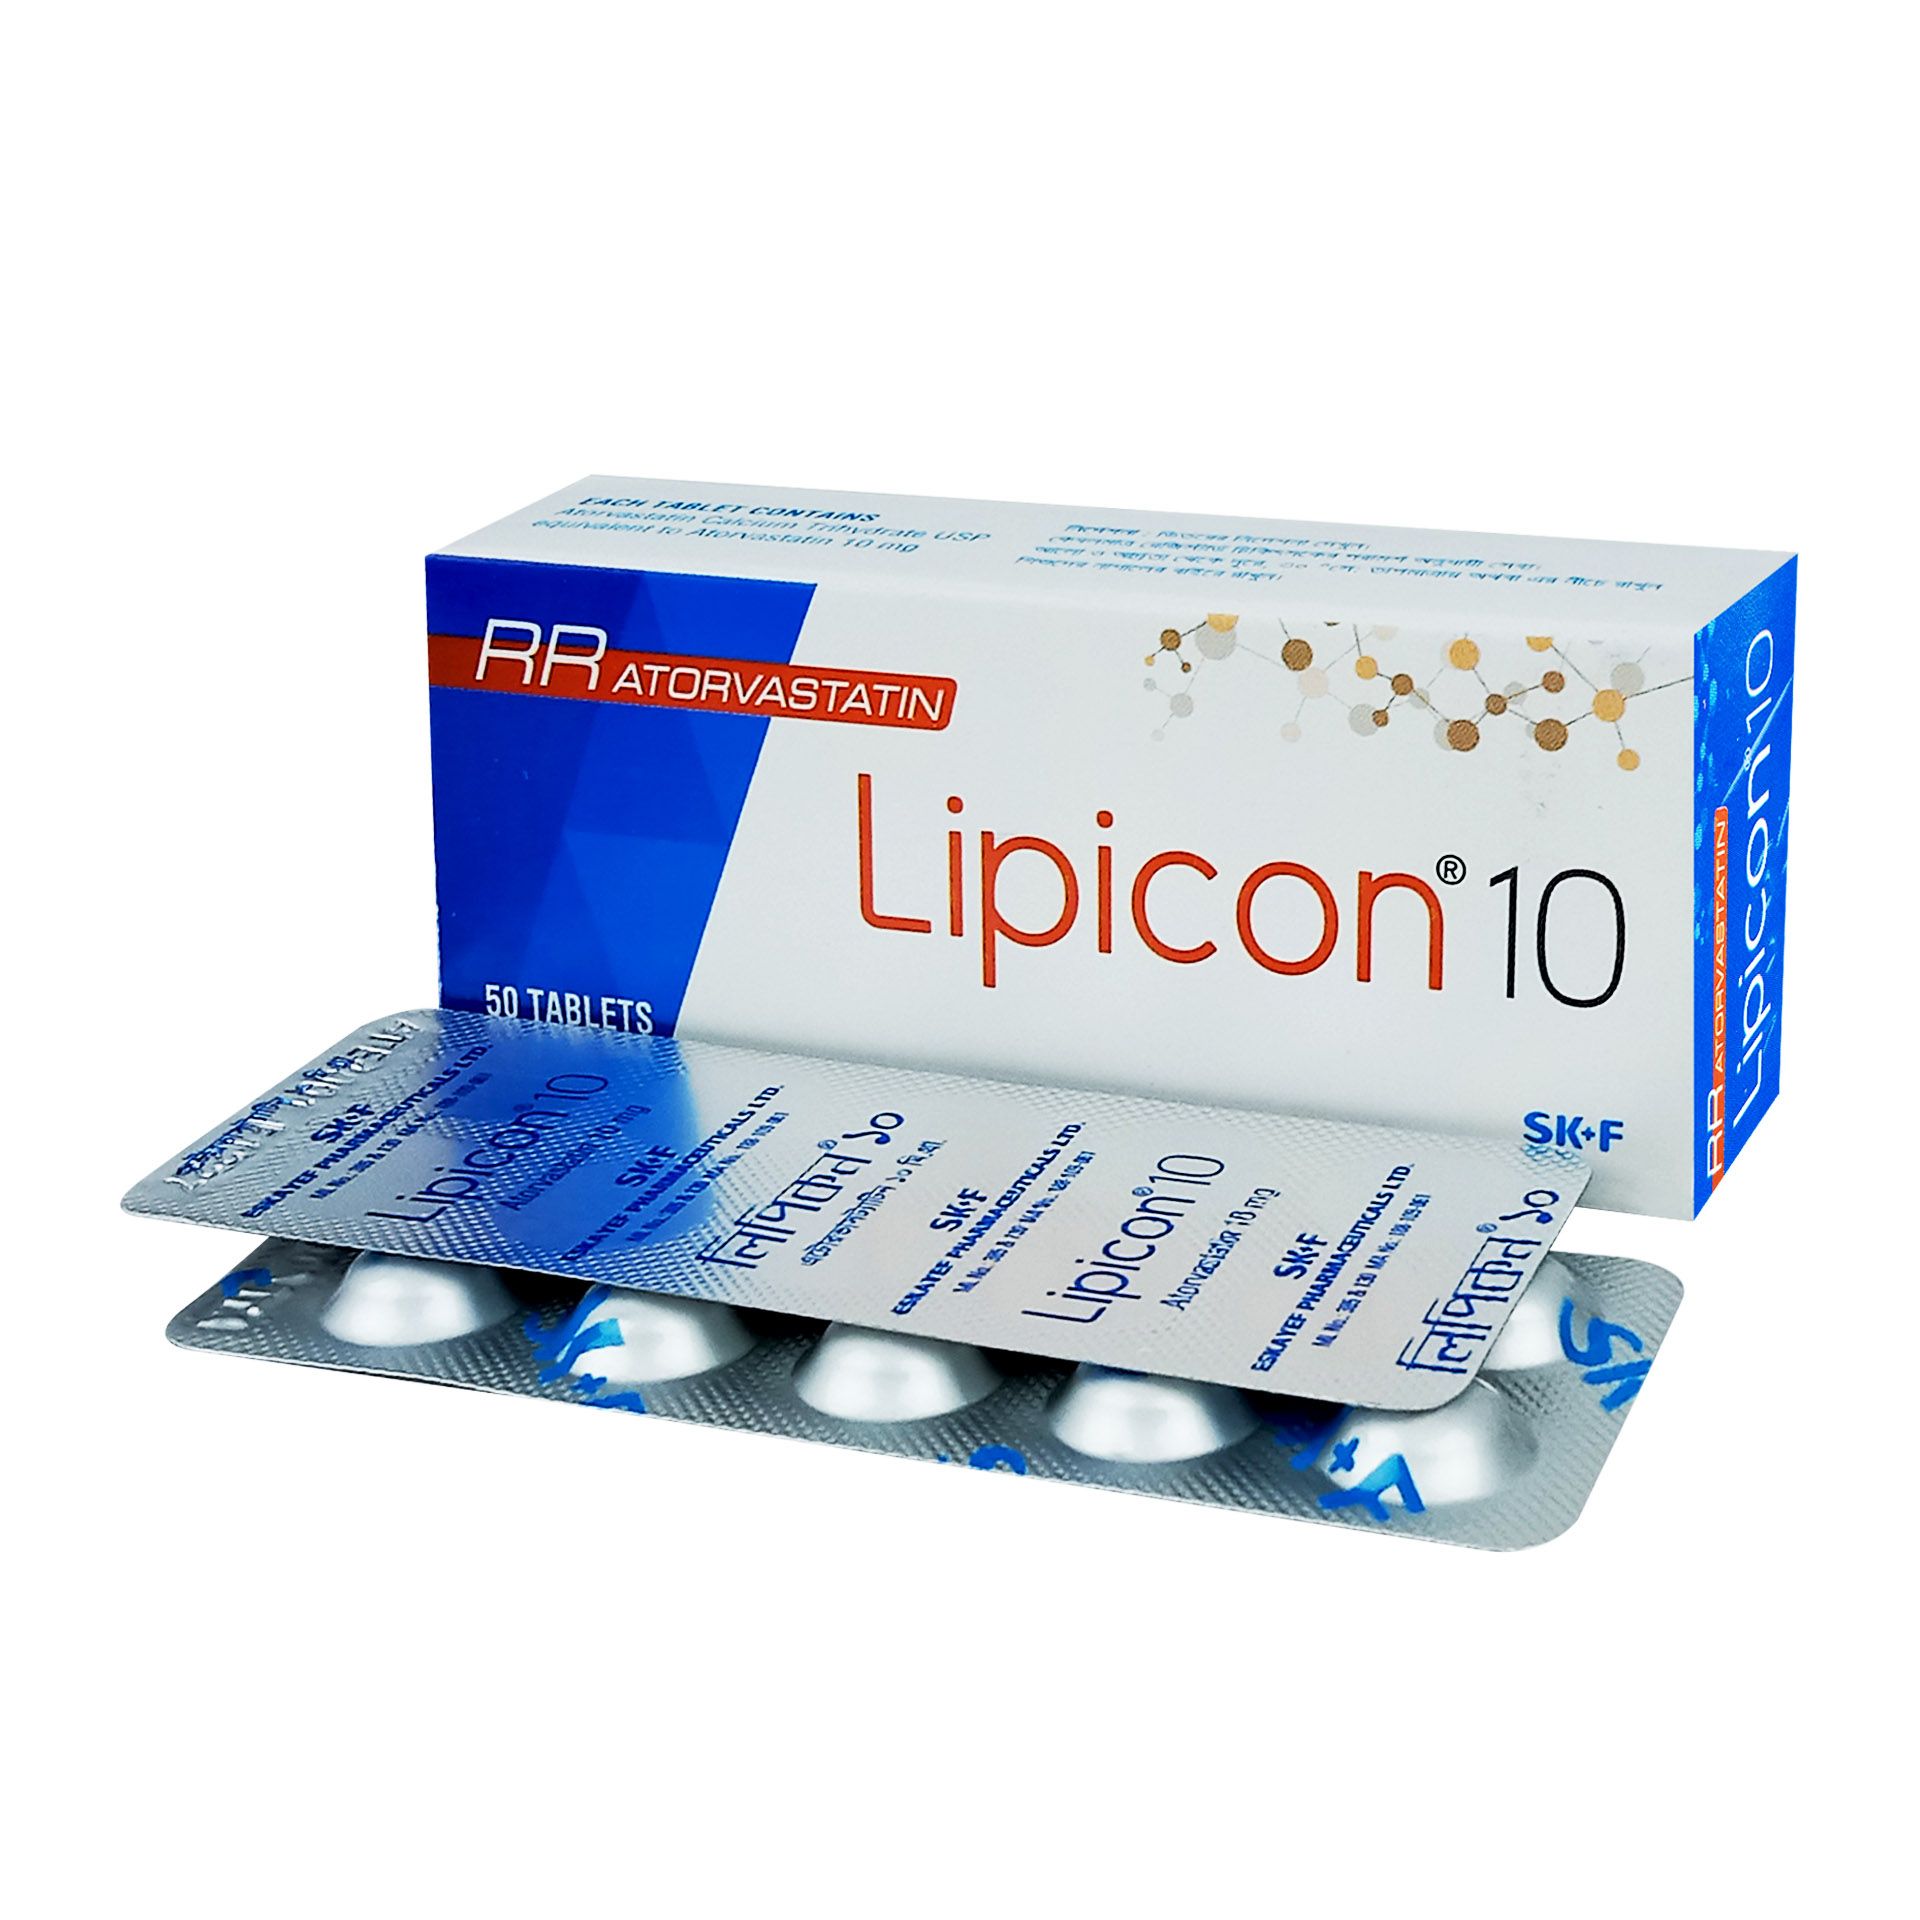 Lipicon 10